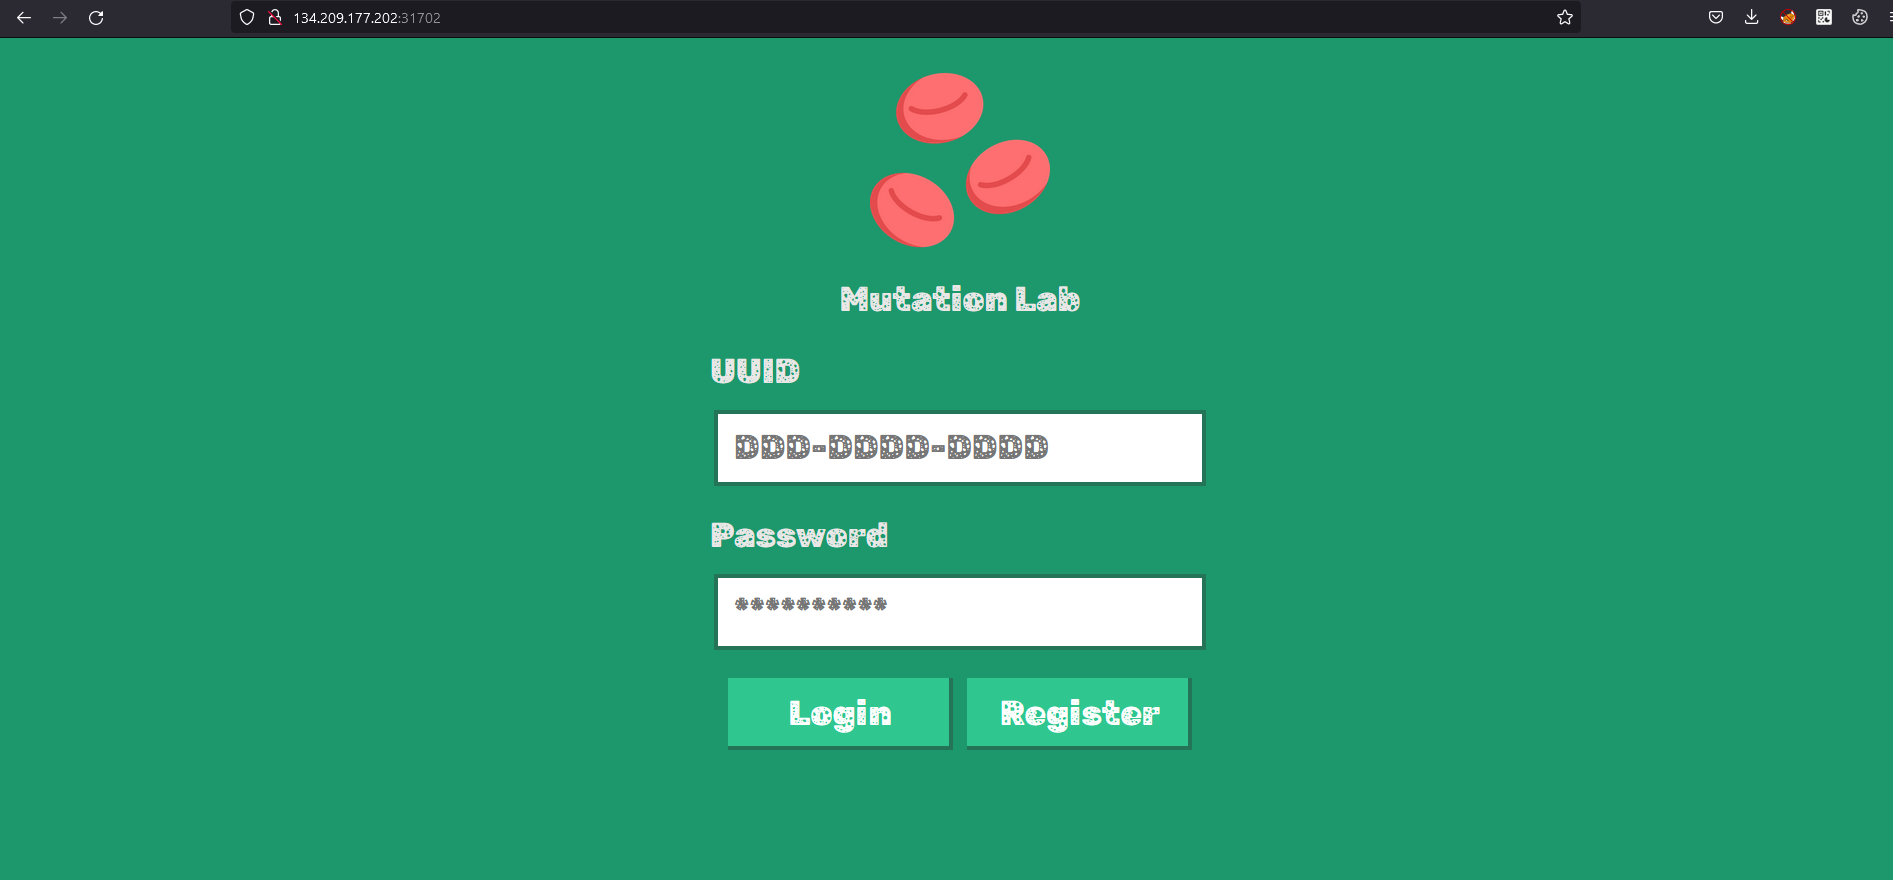 Mutation Lab - writeup - 2.png